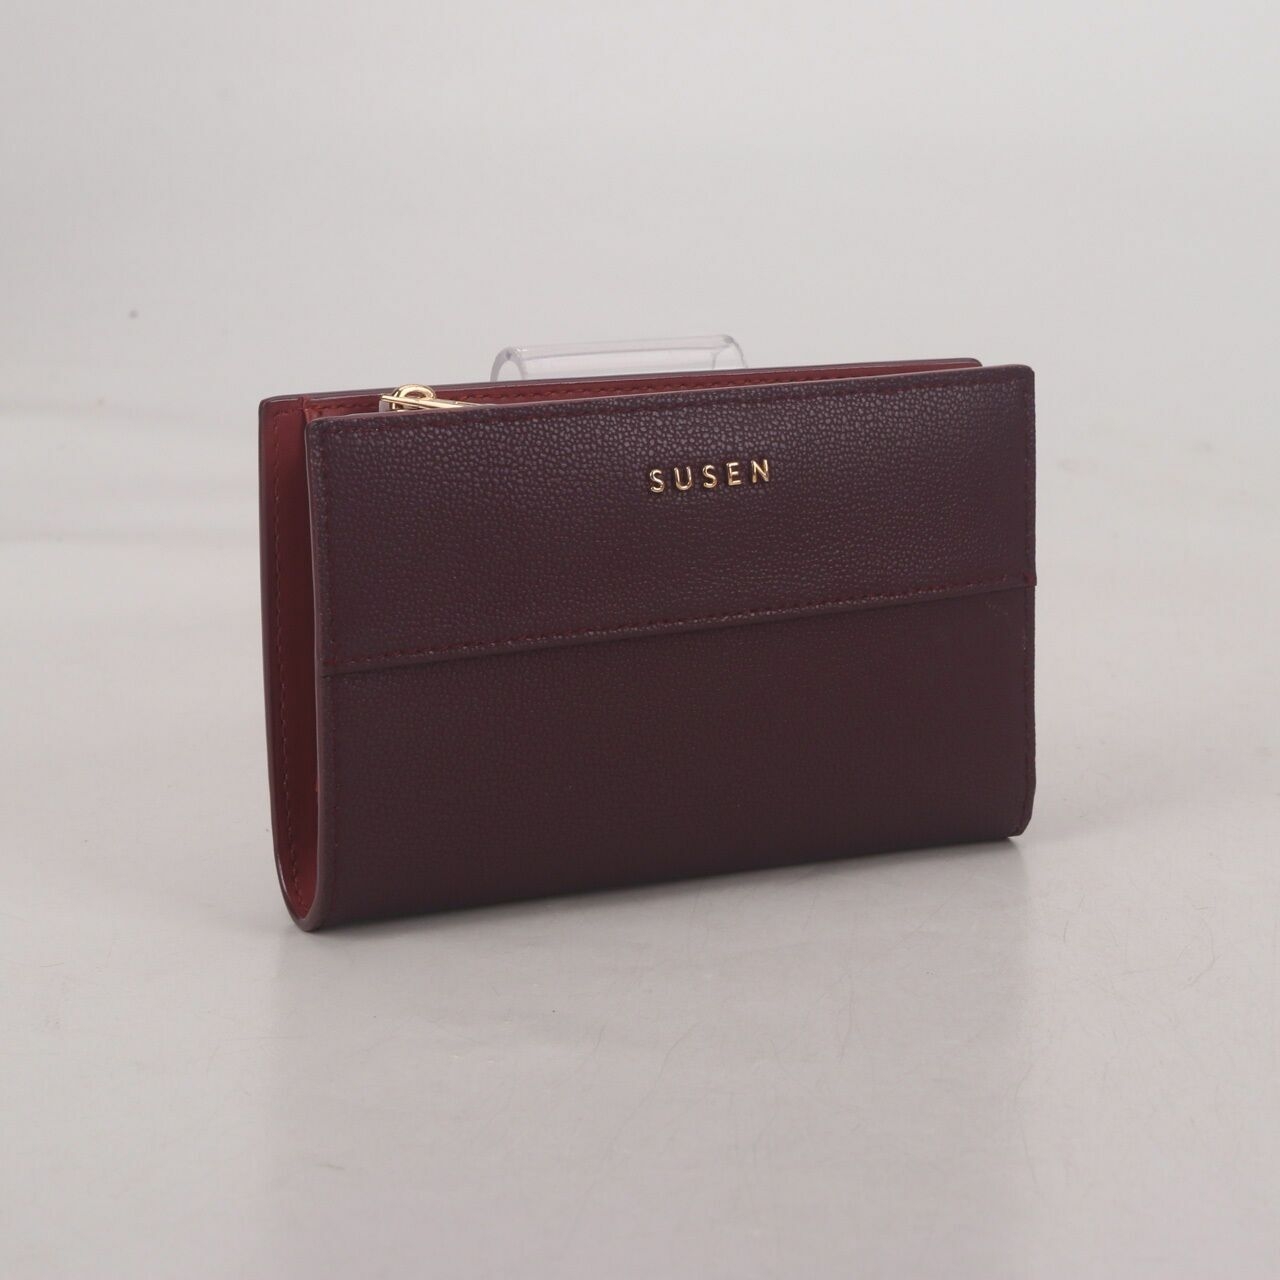 Susen Compact Wallet 4002 Red Wine